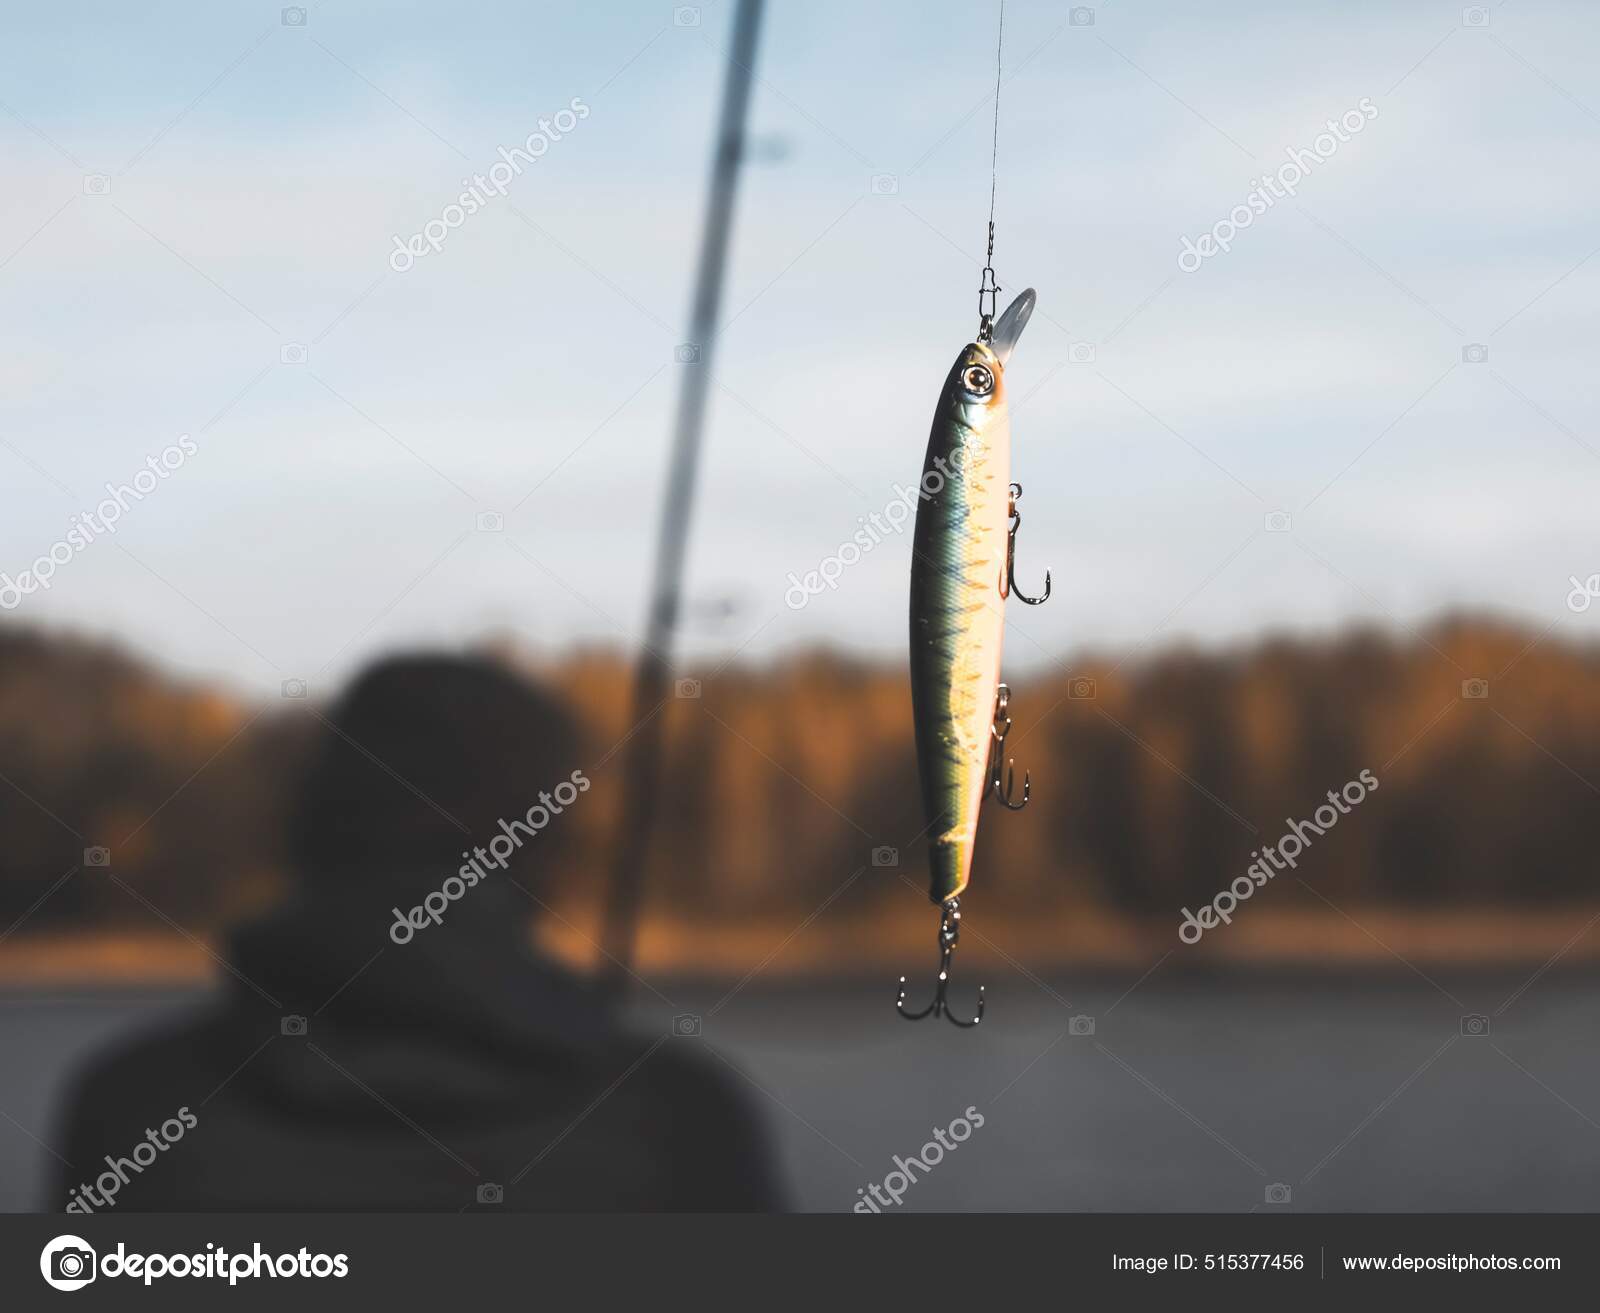 https://st.depositphotos.com/39463116/51537/i/1600/depositphotos_515377456-stock-photo-swim-bait-or-wobbler-hanging.jpg